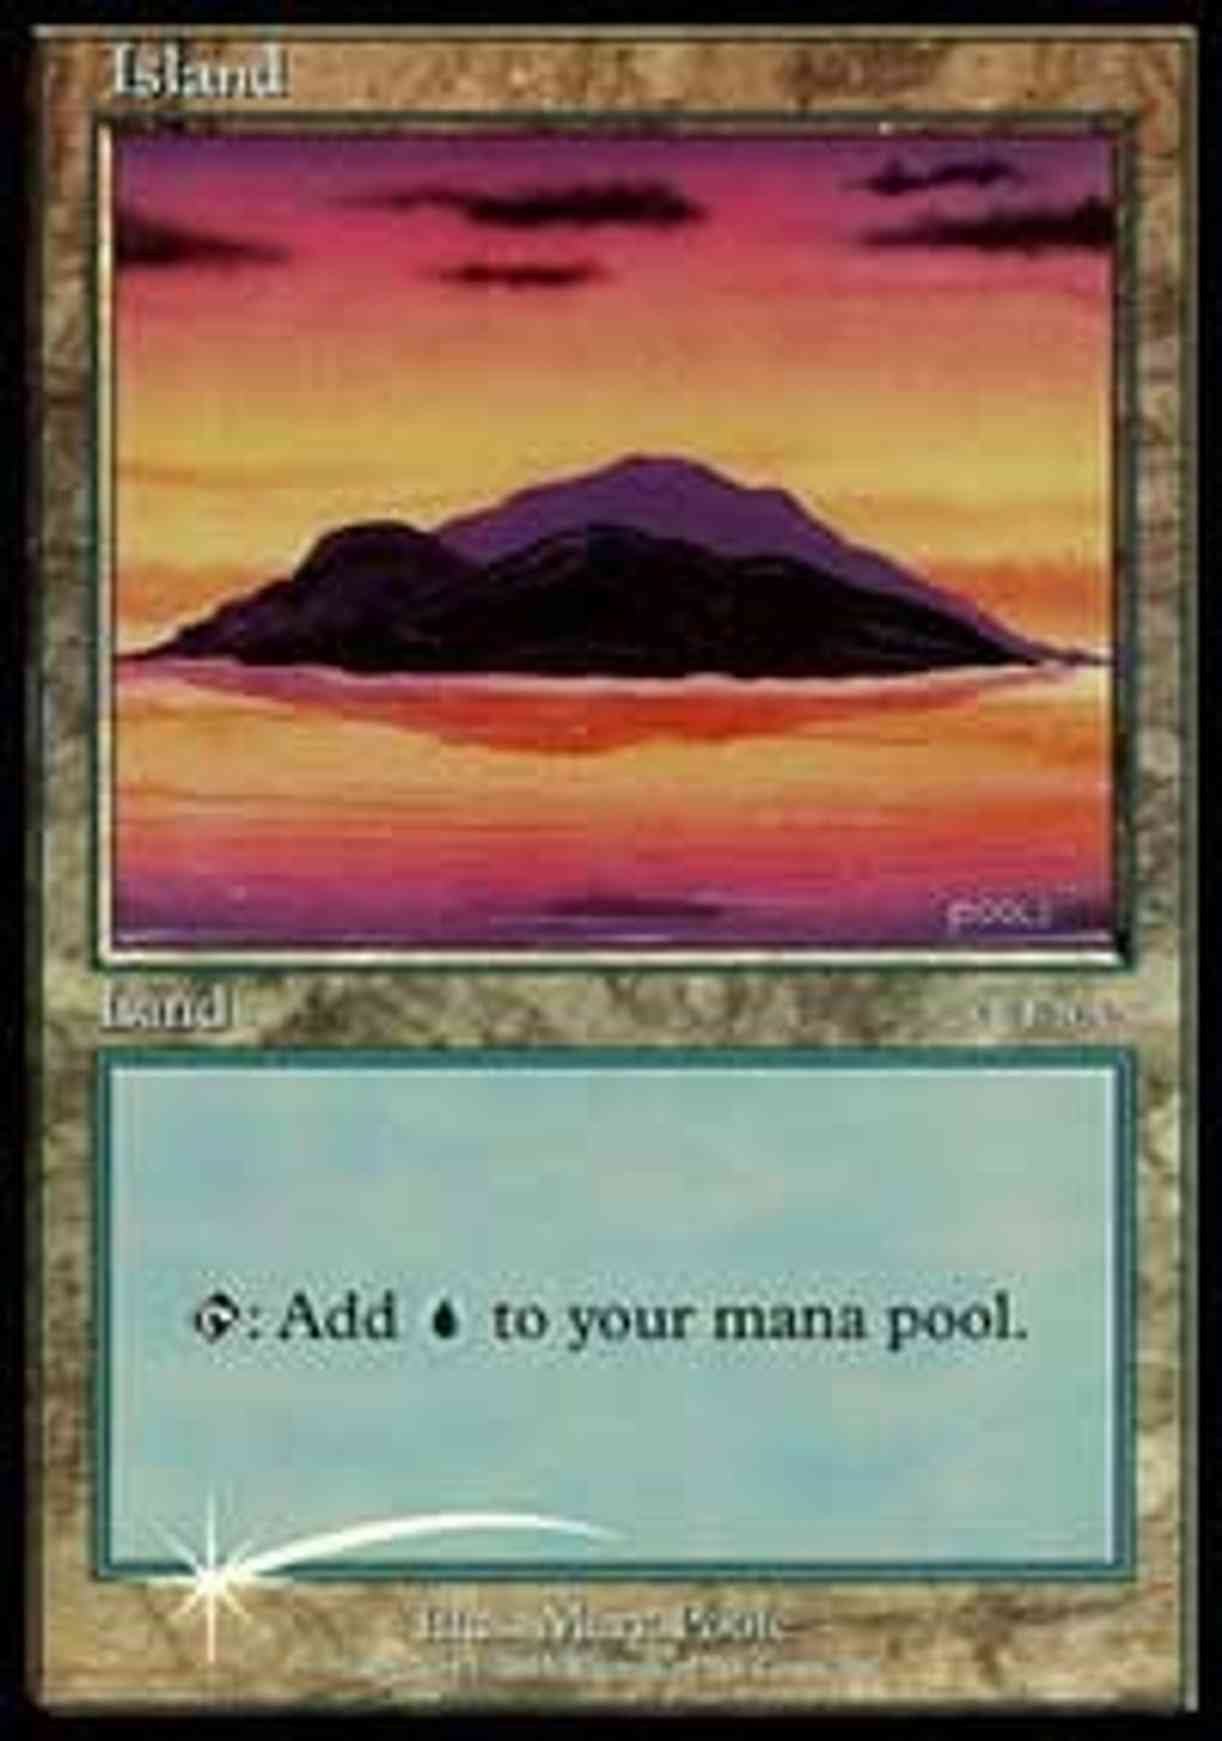 Island (2002) magic card front